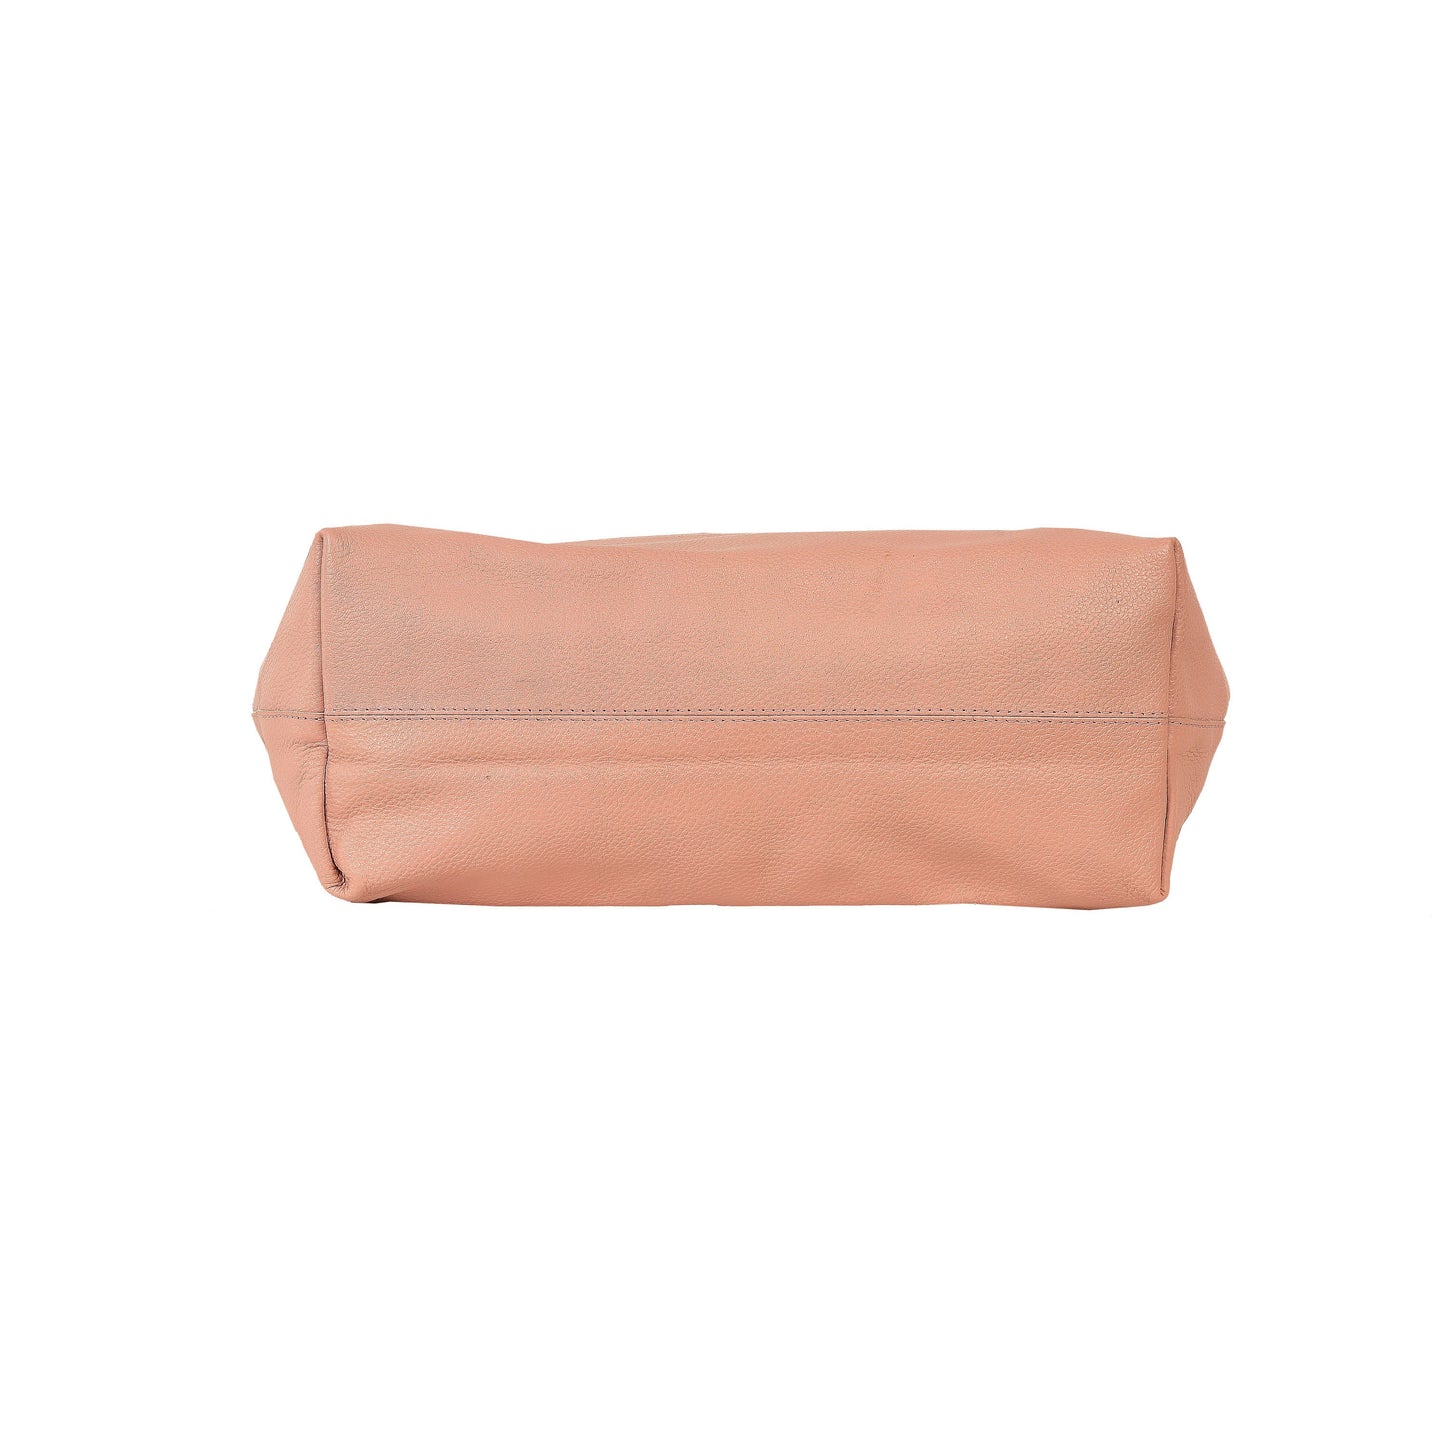 Baby Pink Leather Tote Bag for Women Raw Edge Shopper Purse Unlined Bag Leather Shoulder Bag Large Marketing Bag Everyday Tote Bag Large